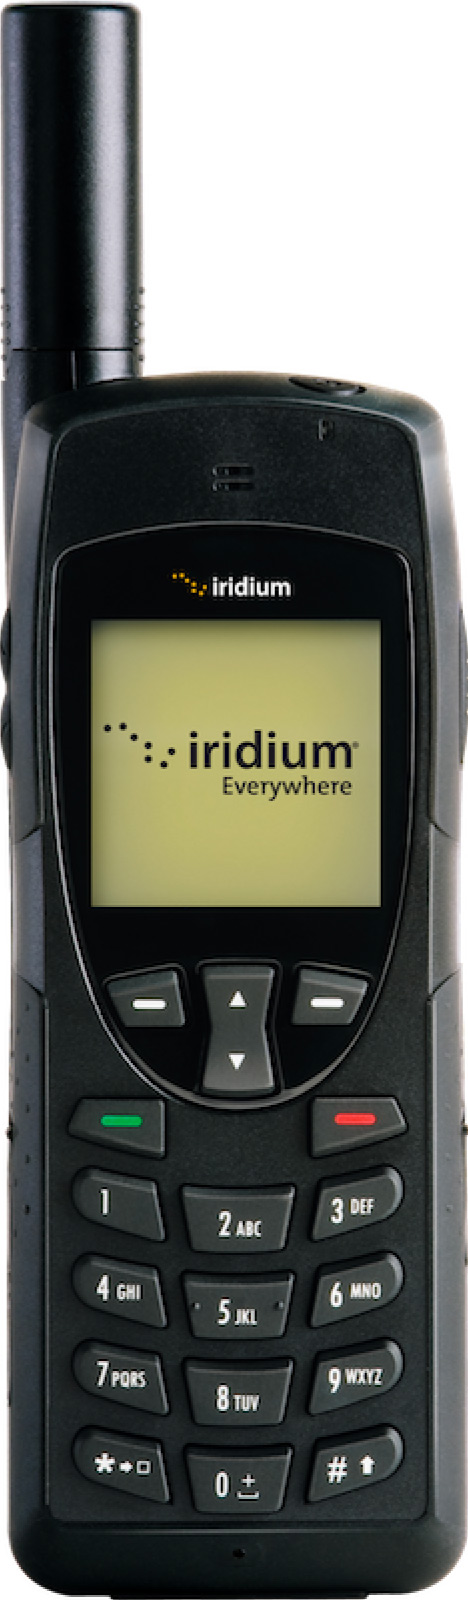 telefono iridium 9555